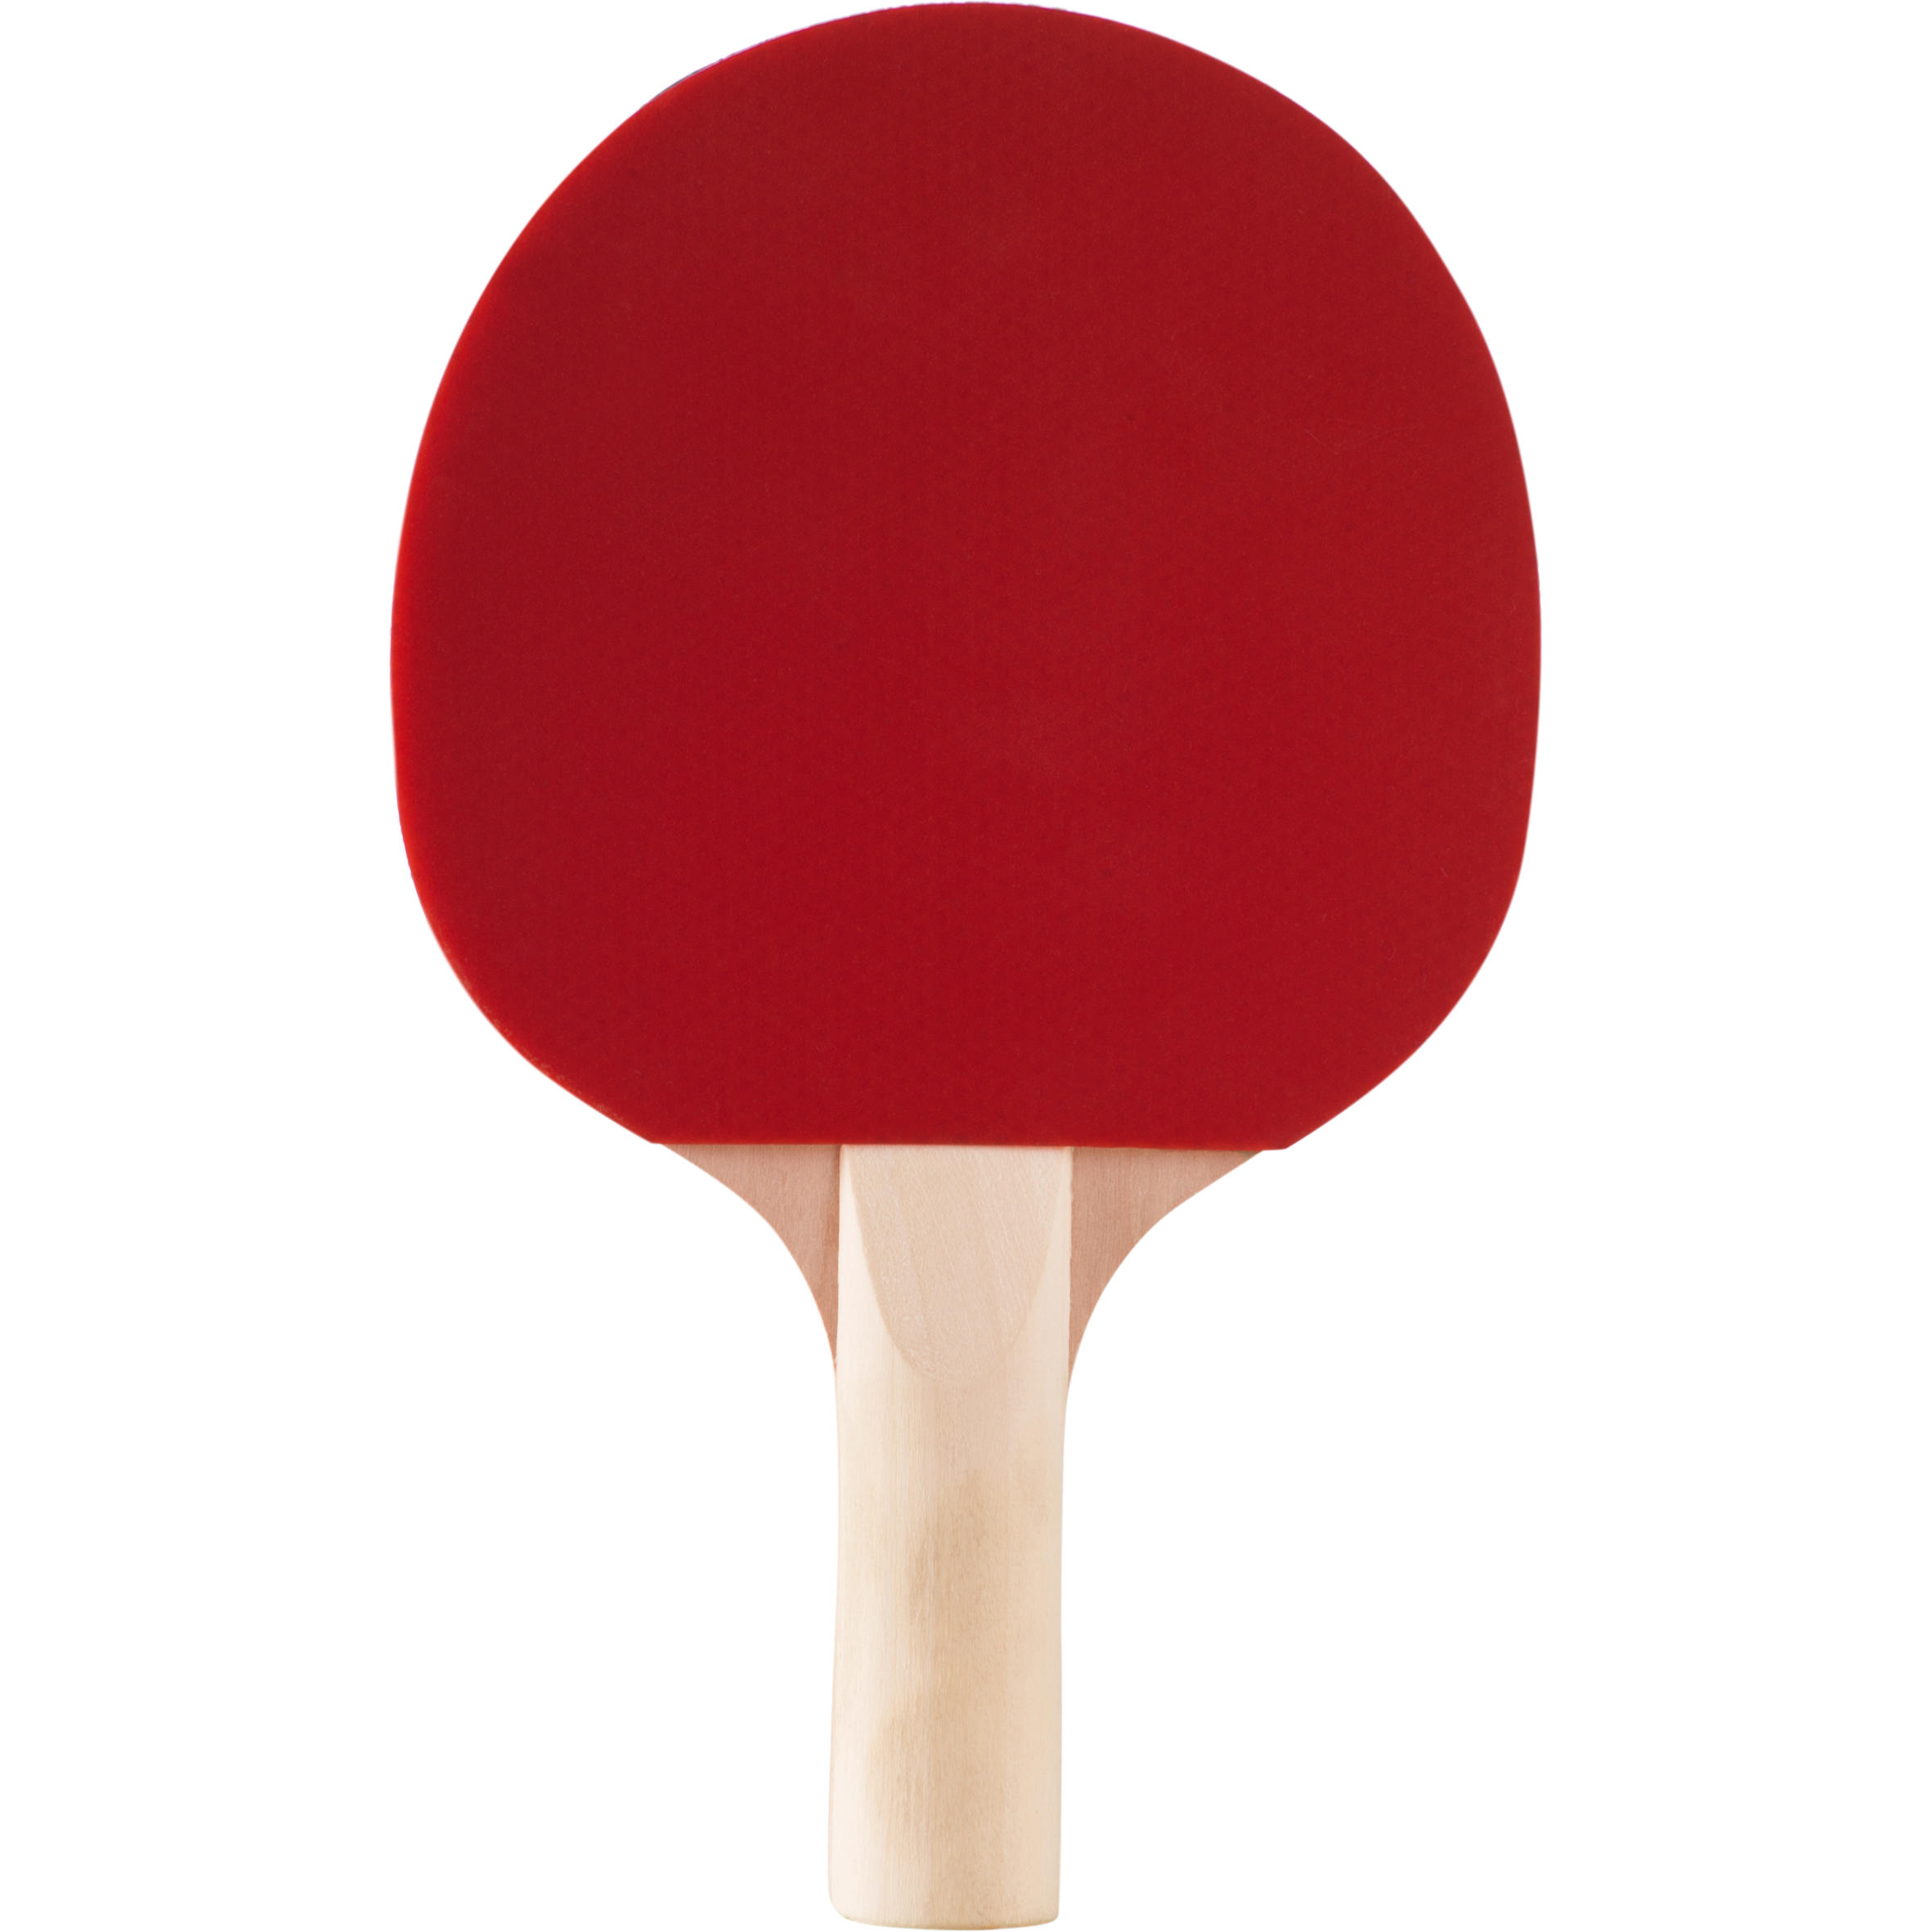 pongori table tennis bat